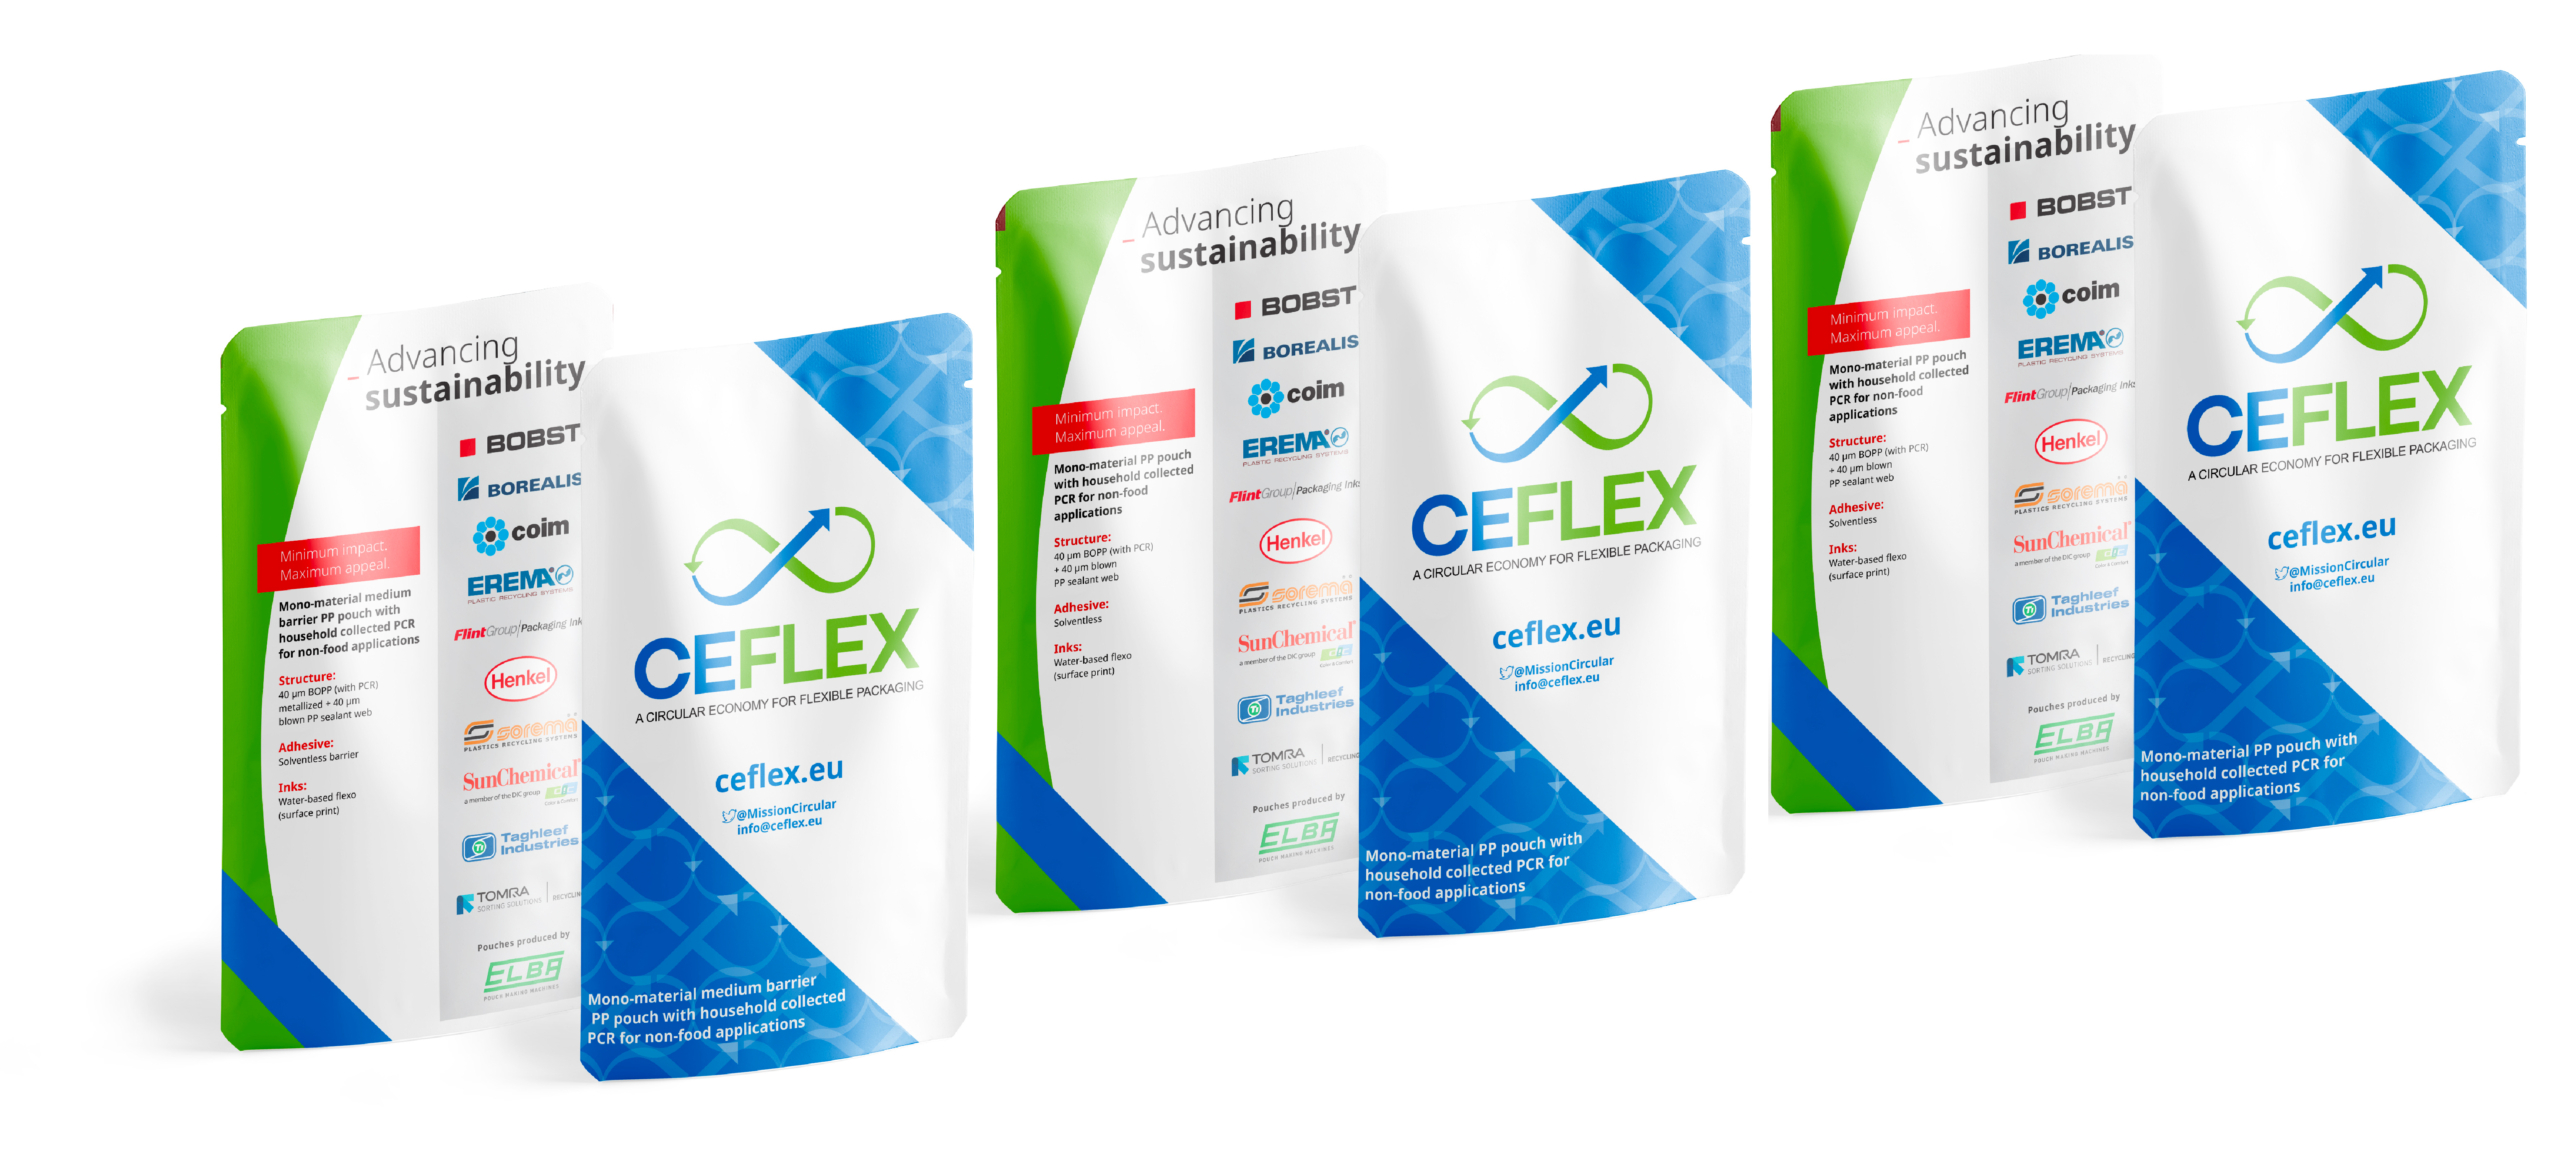 collaboration with ceflex